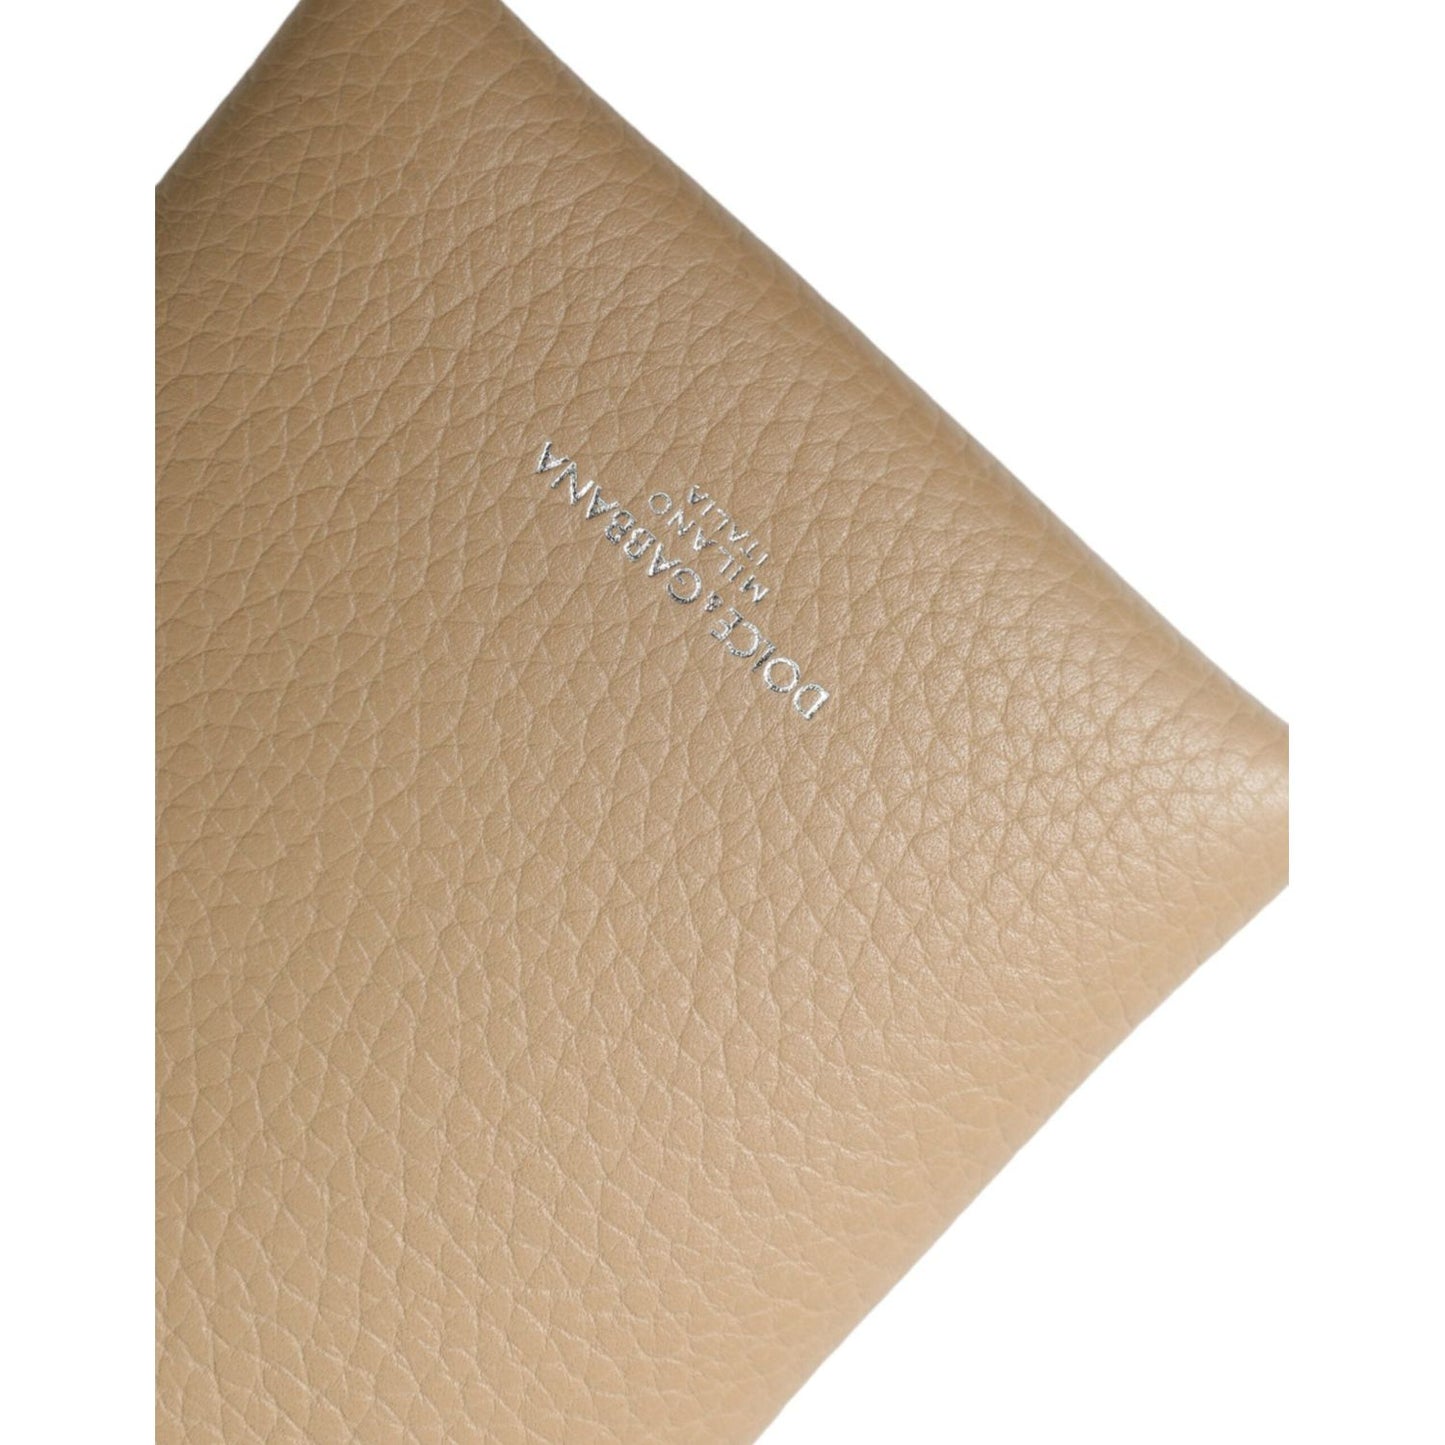 Dolce & Gabbana | Chic Beige Leather Crossbody Phone Bag| McRichard Designer Brands   